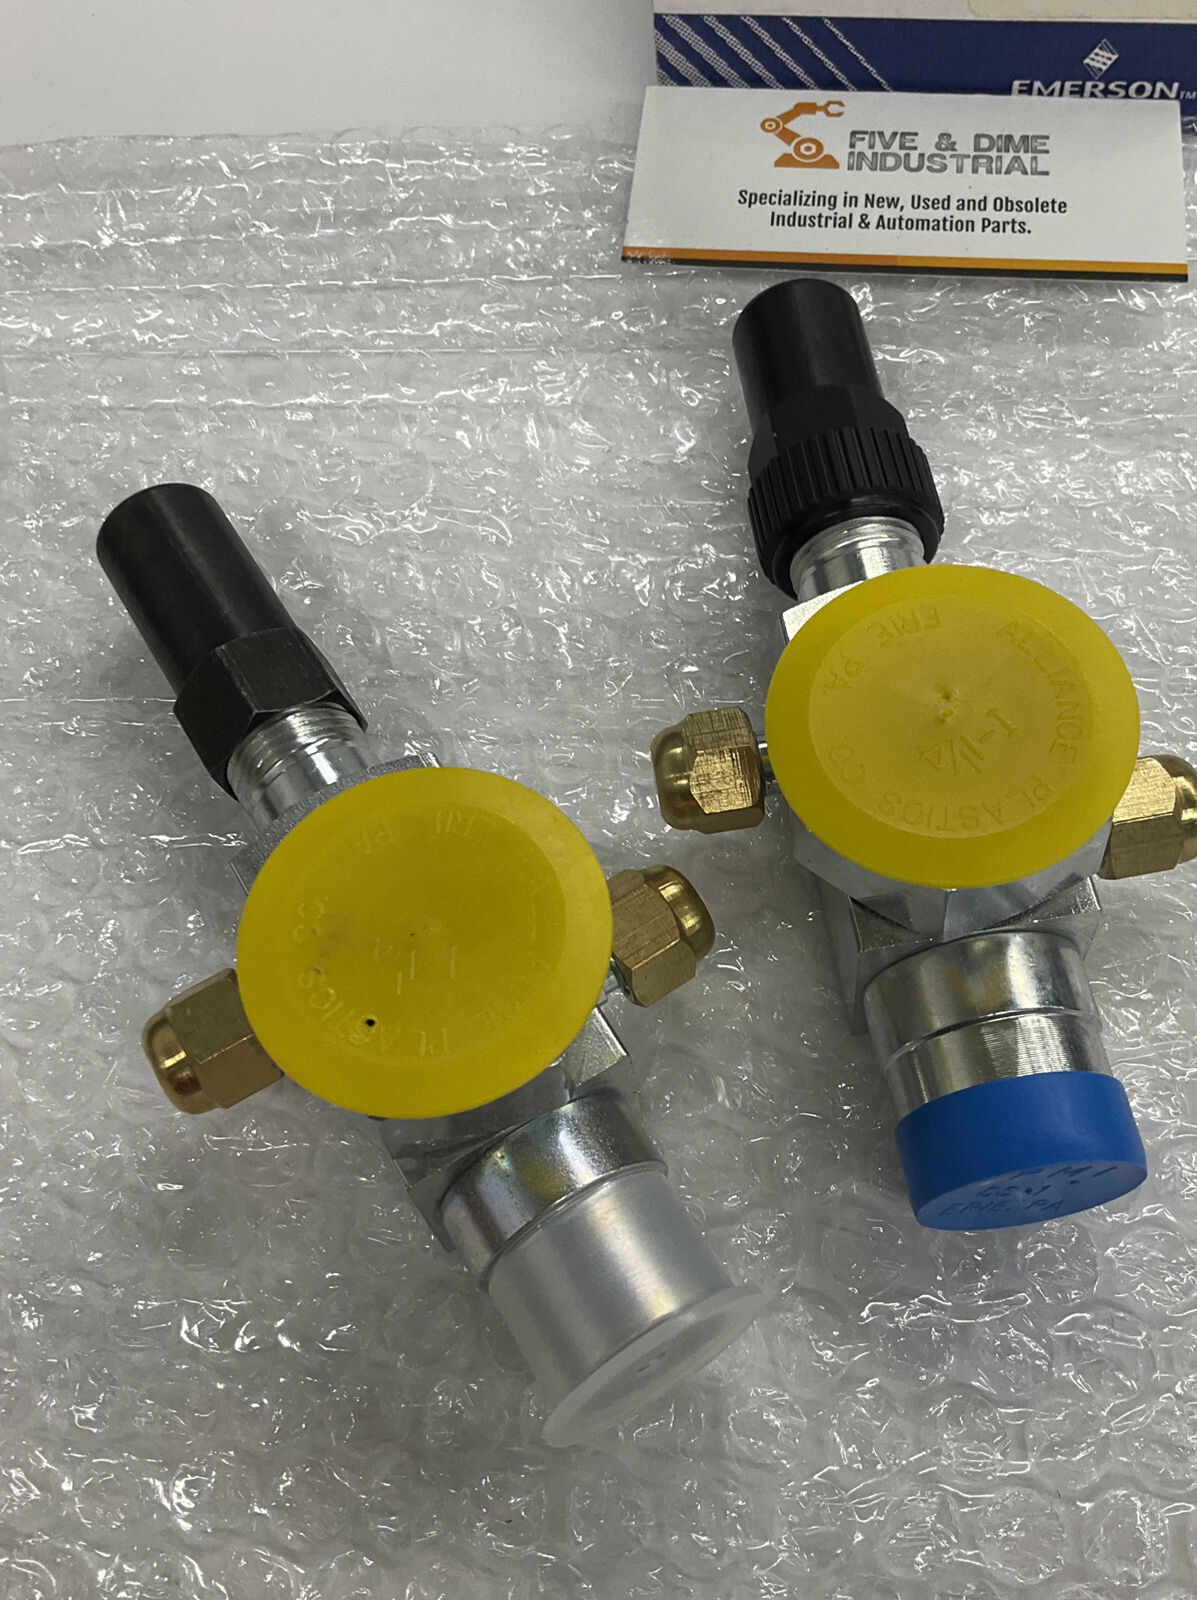 Copeland 998-5100-62 New Compressor Suction & Discharge Valve Kit (OV113)